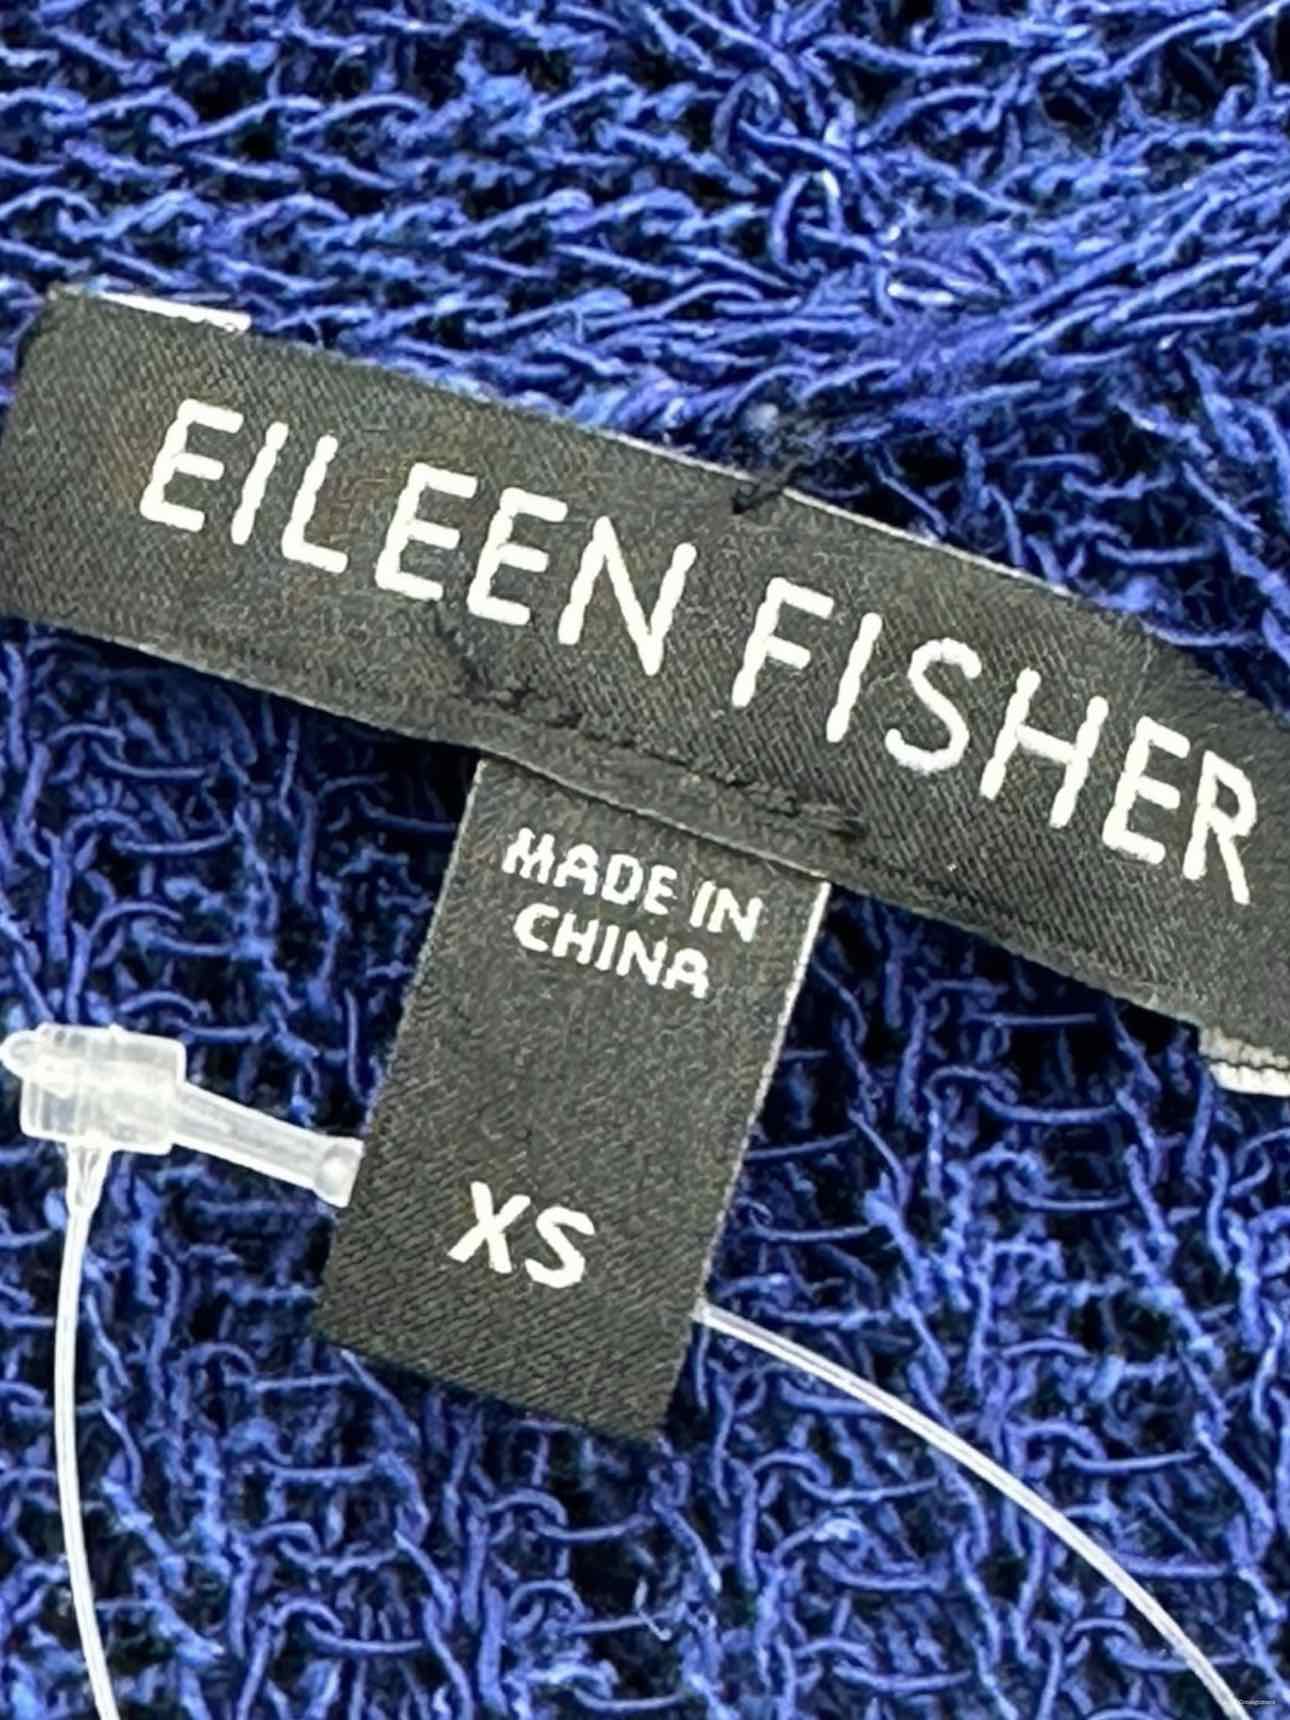 EILEEN FISHER Blue Linen Cardigan Size XS